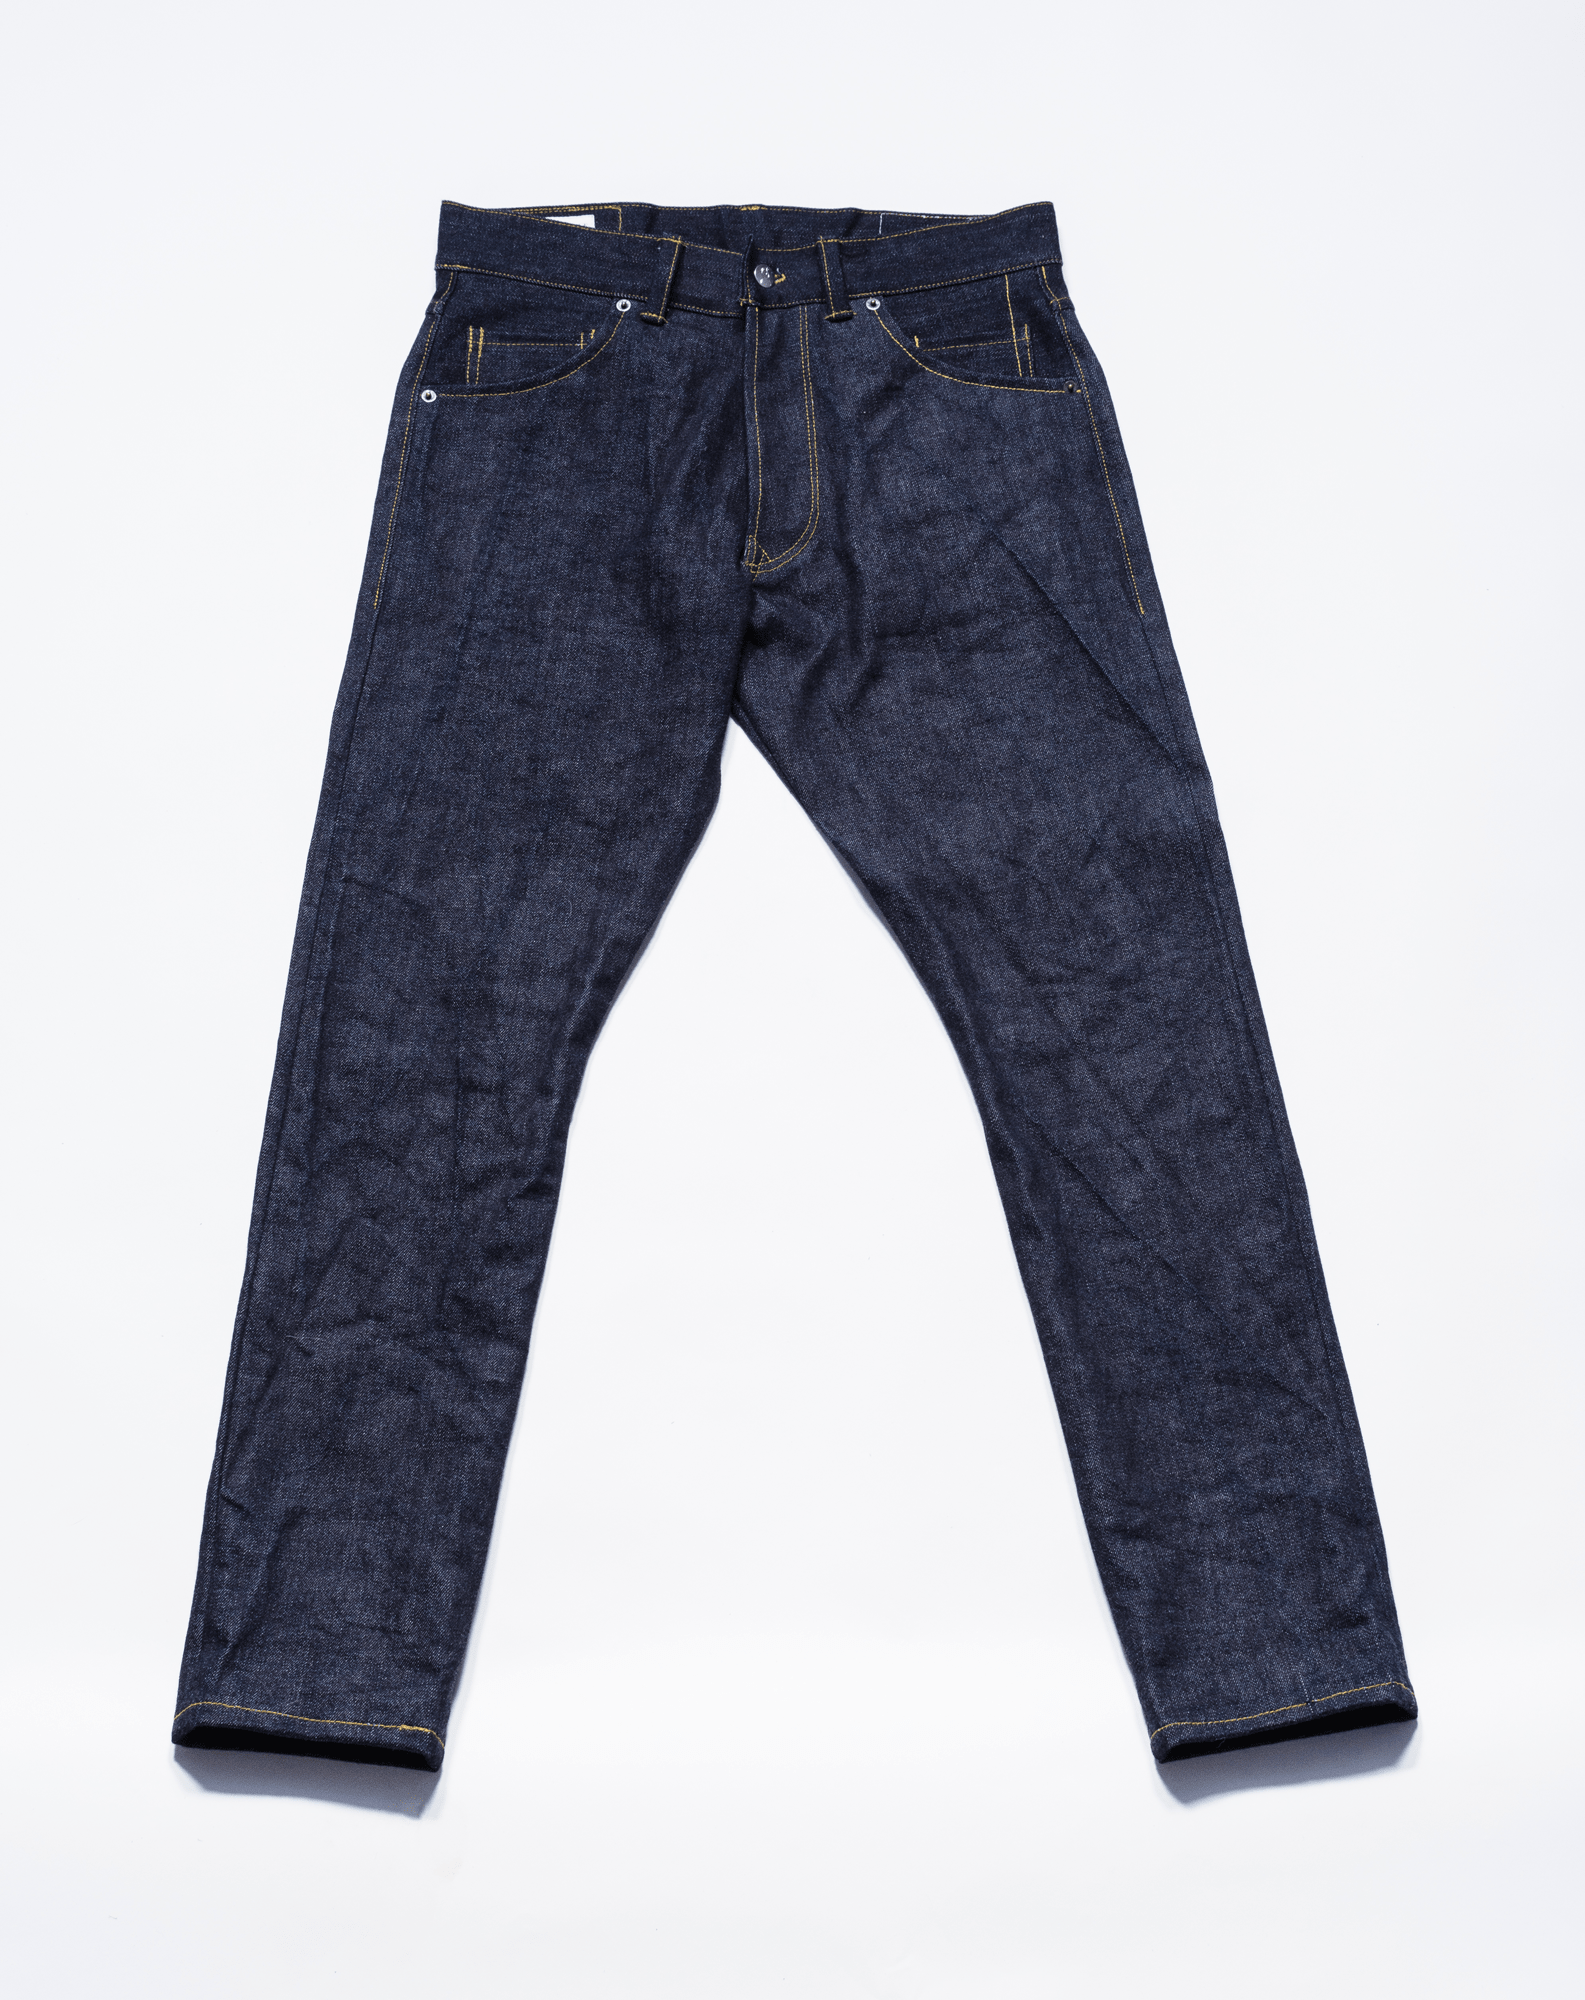 14oz Japanese Selvedge Denim Super Slim Fit Jeans-Indigo – Mith Jeans